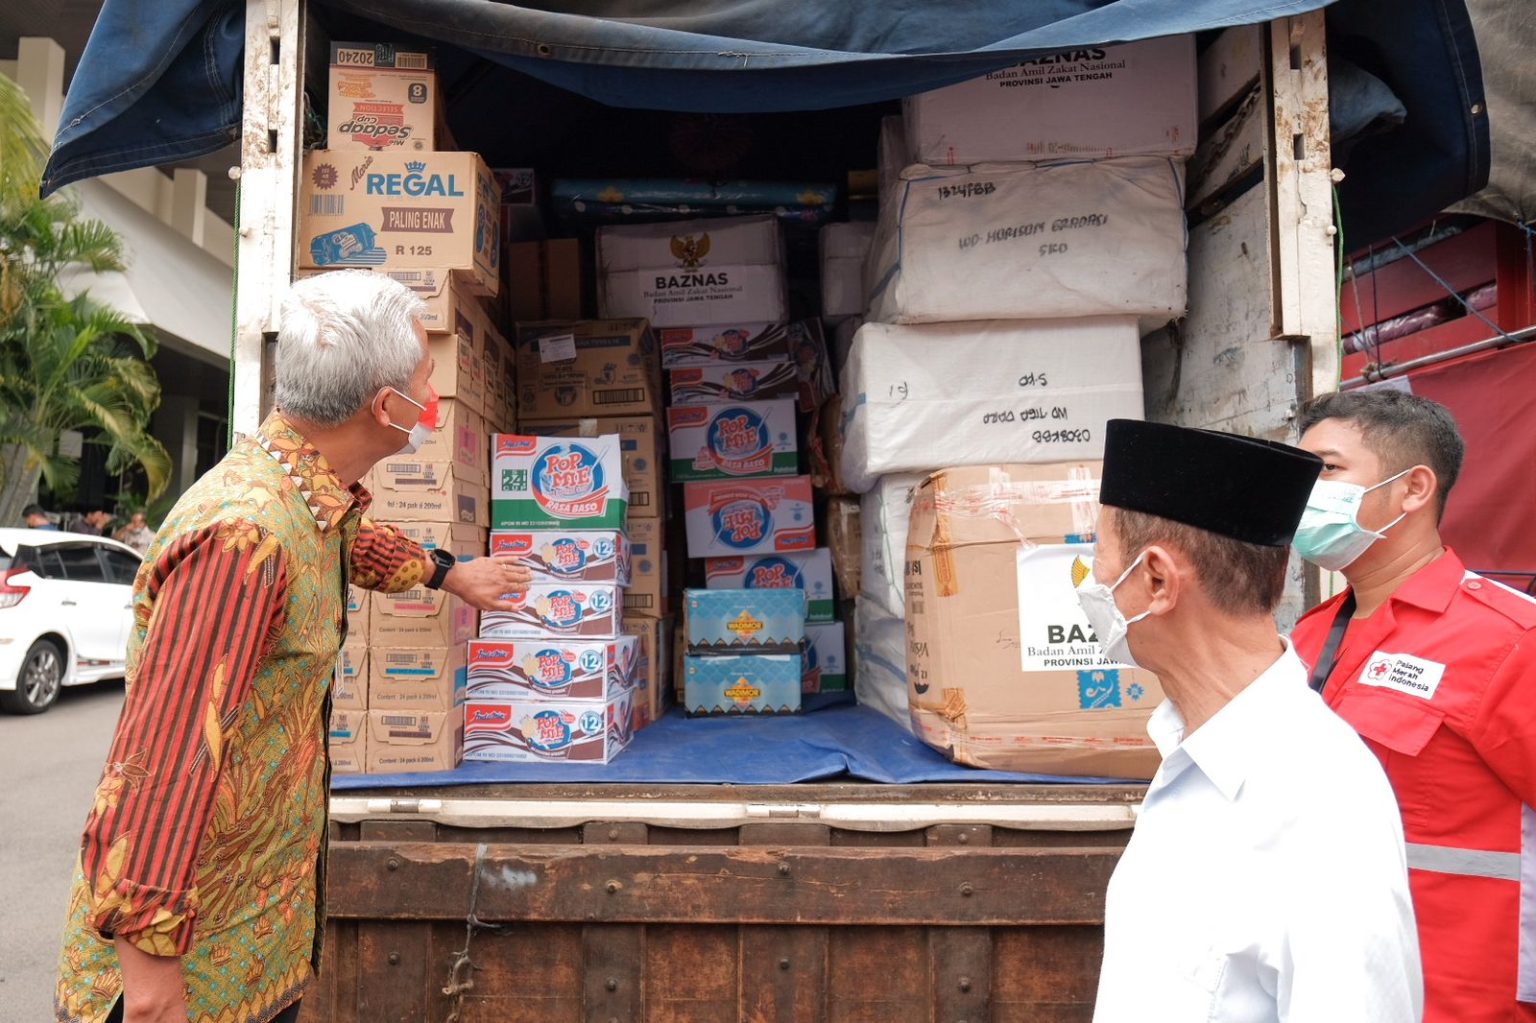 Pemprov Jateng salurkan Rp1,87 miliar untuk korban gempa Cianjur